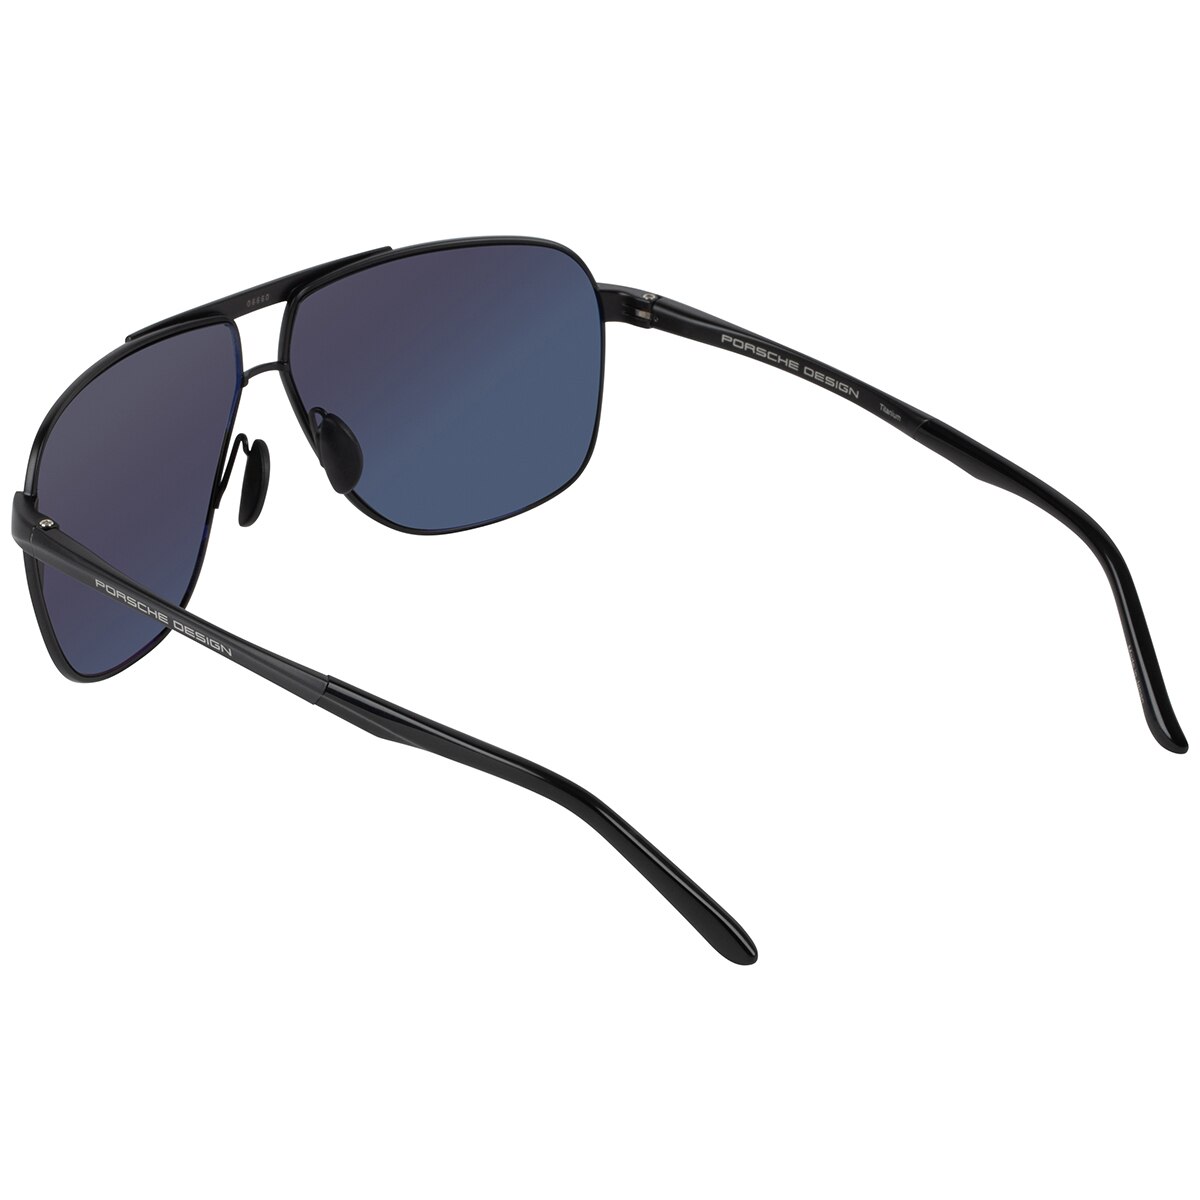 Porsche Sunglasses P8665 A Black Polarised